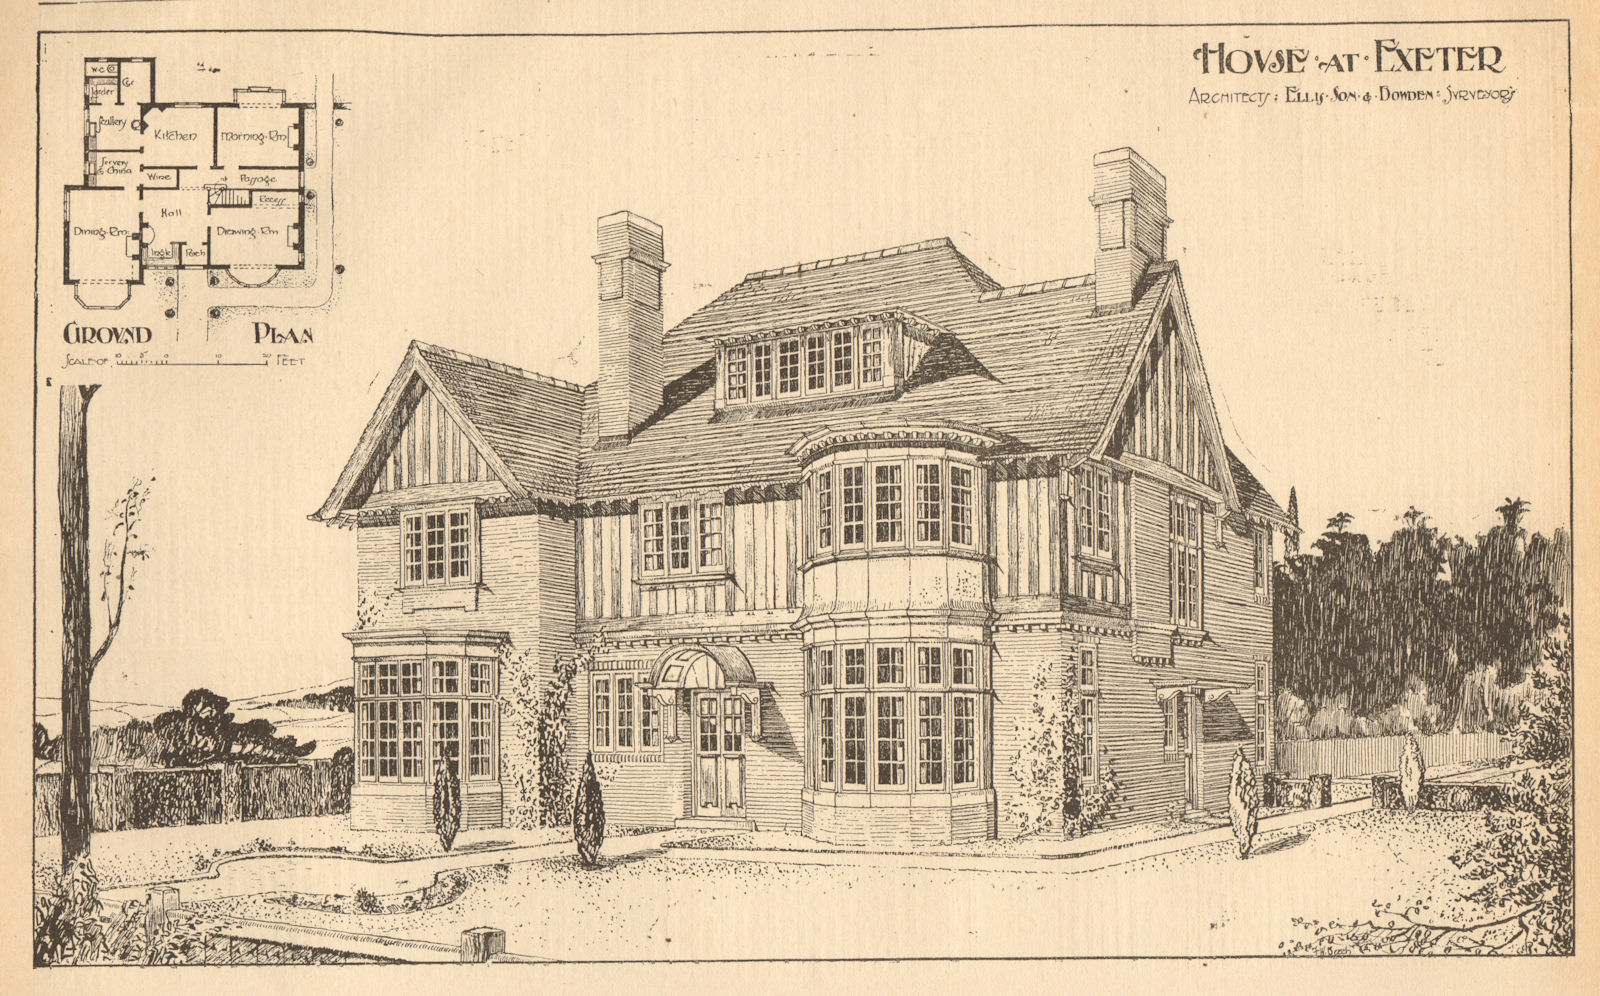 Associate Product House at Exeter, Architects: Ellis Son & Bowden. Devon 1905 old antique print